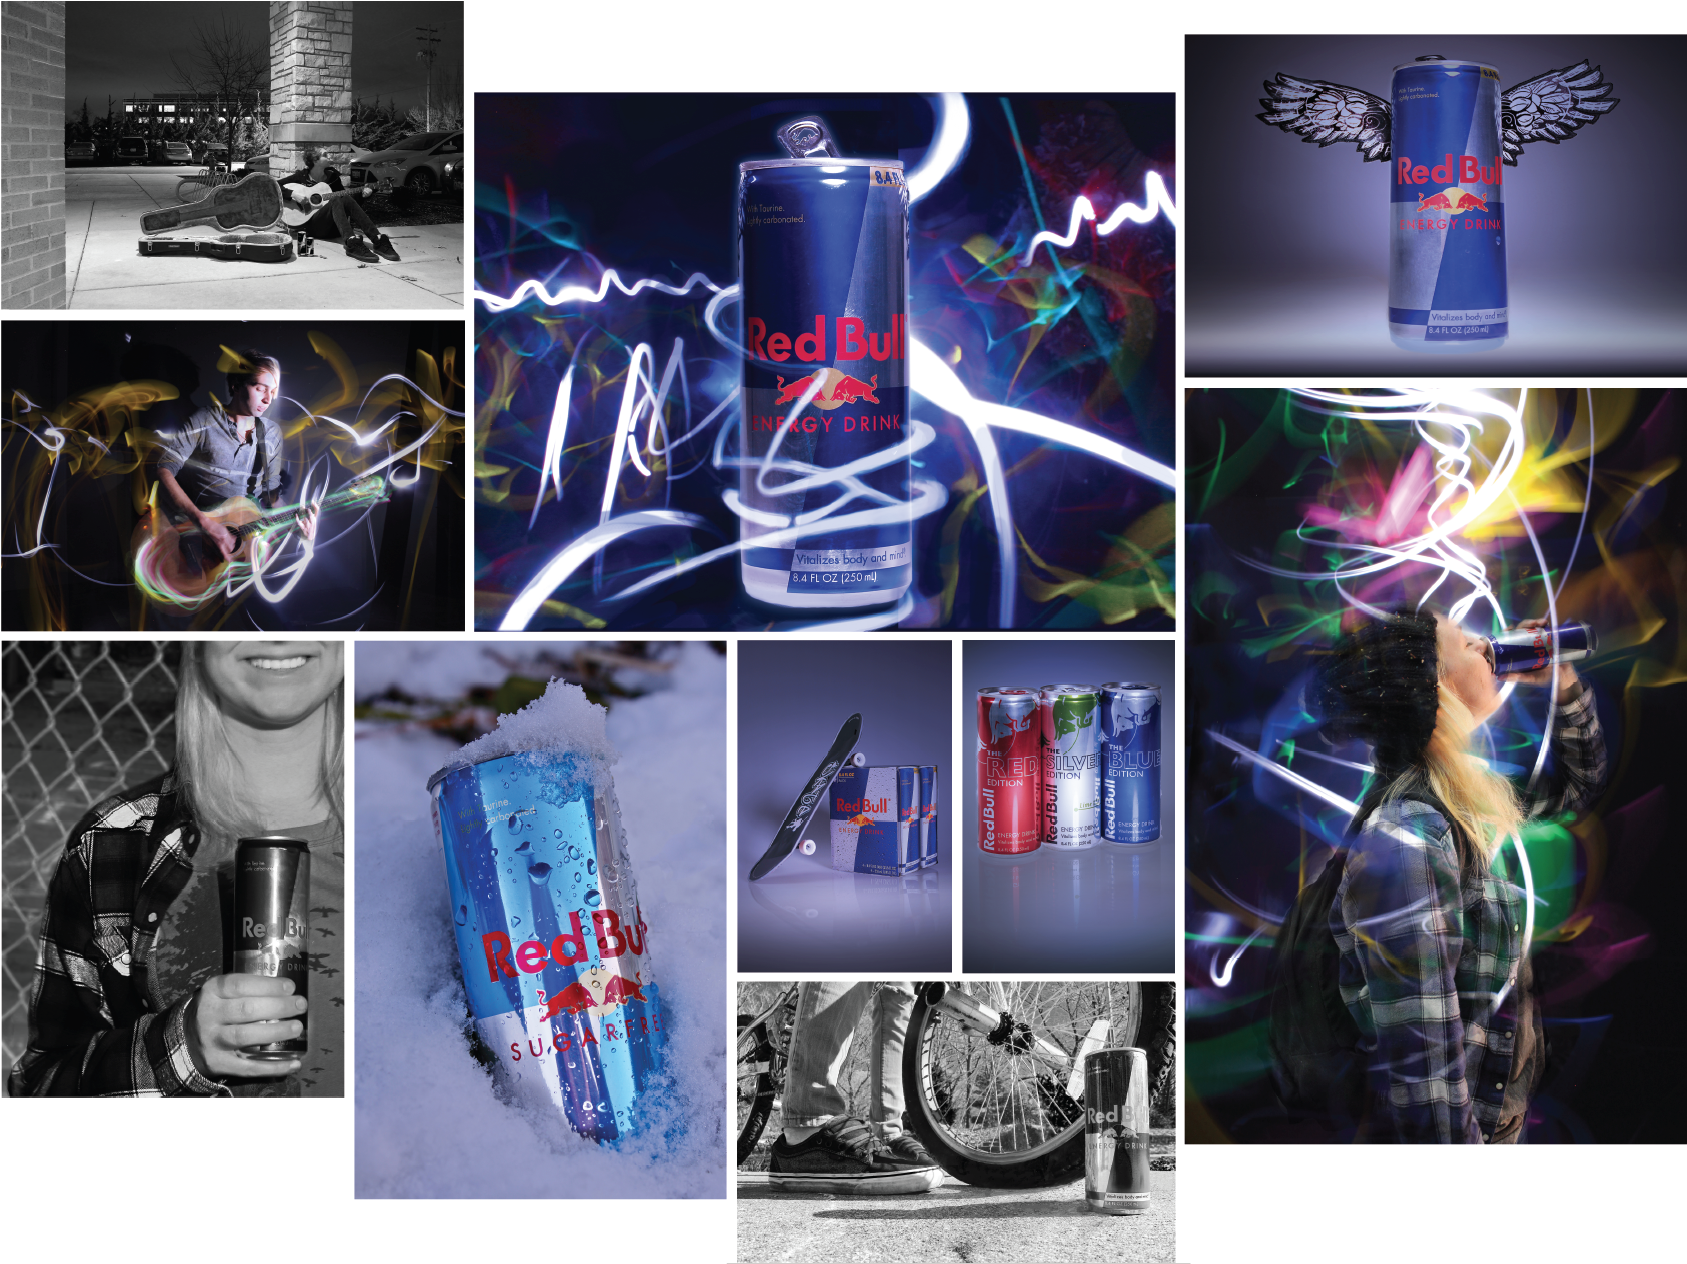  Red Bull Hintergrundbild 1687x1264. RED BULL PRODUCT PHOTOGRAPHY. Behance - Behance